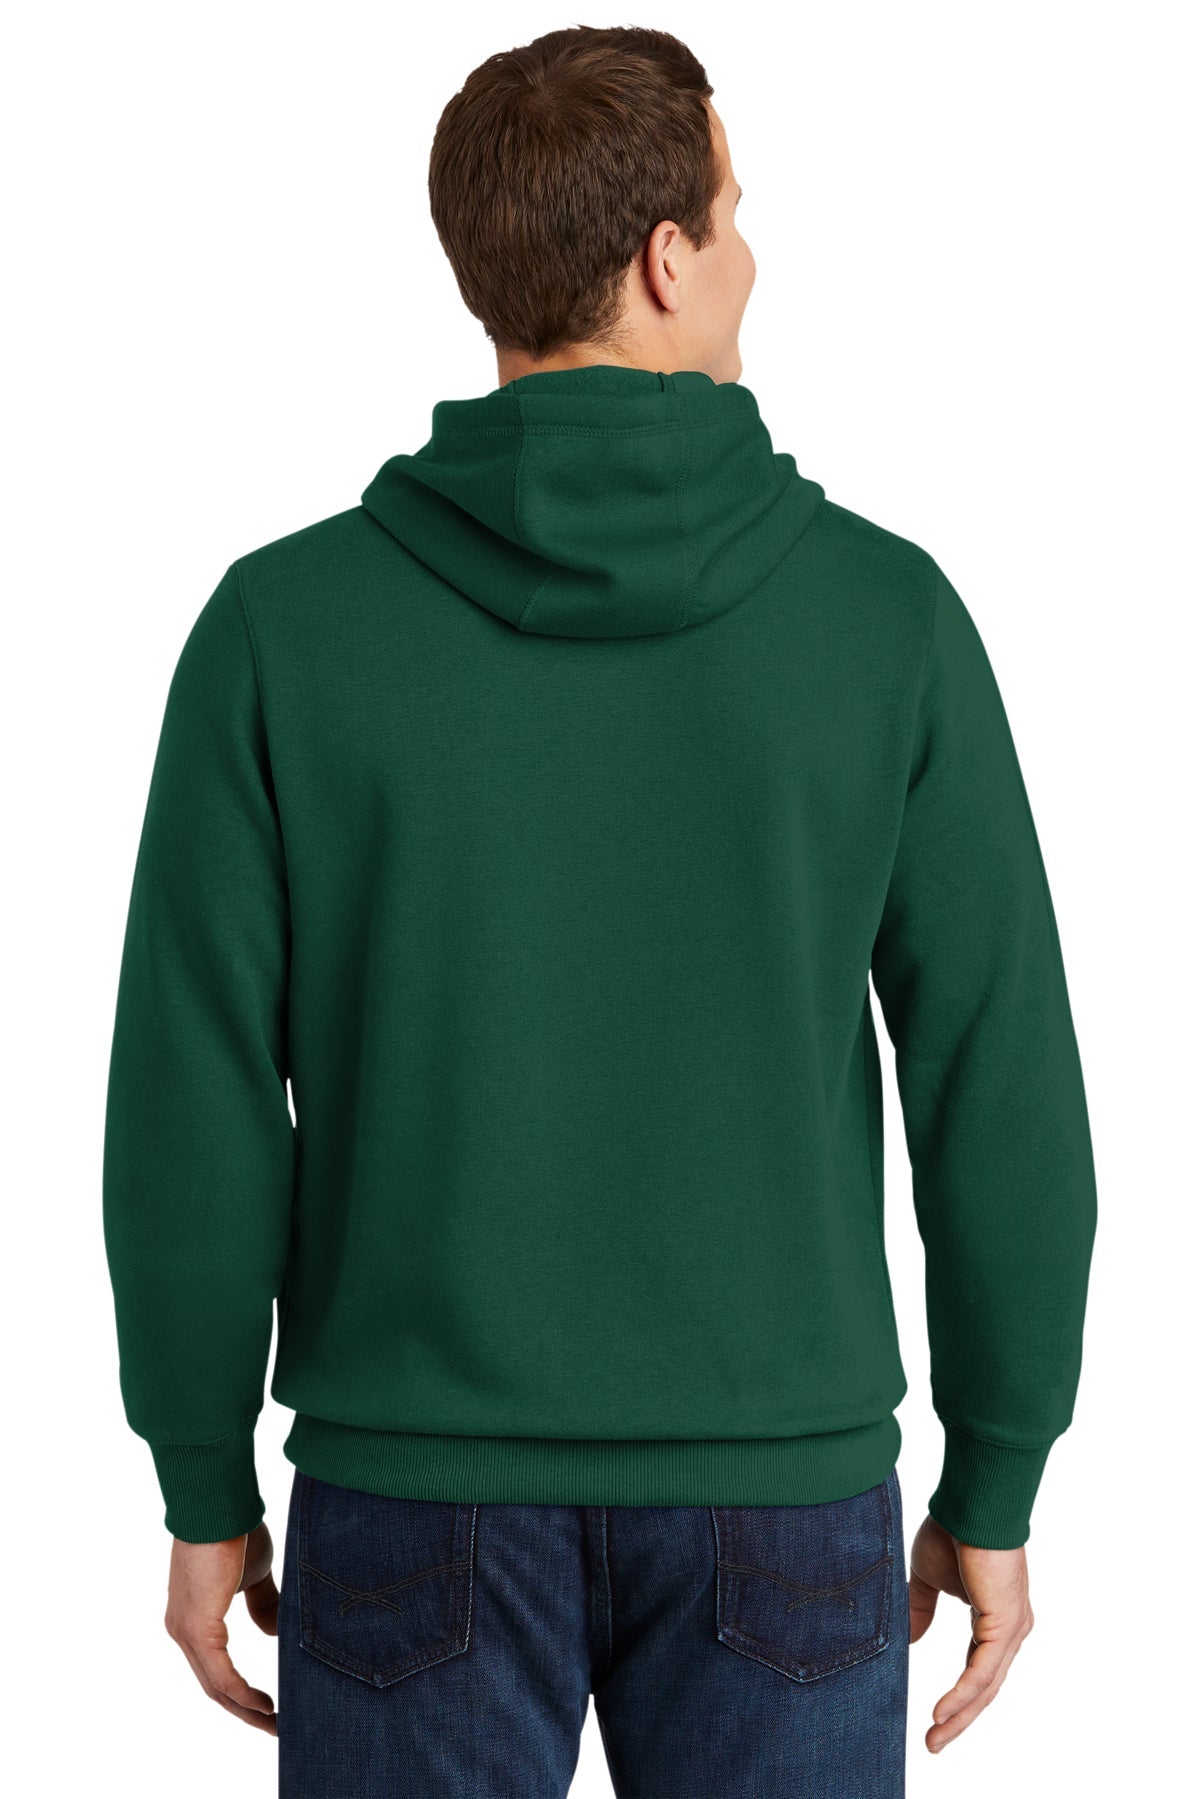 sport-tek_st254 _forest green_company_logo_sweatshirts